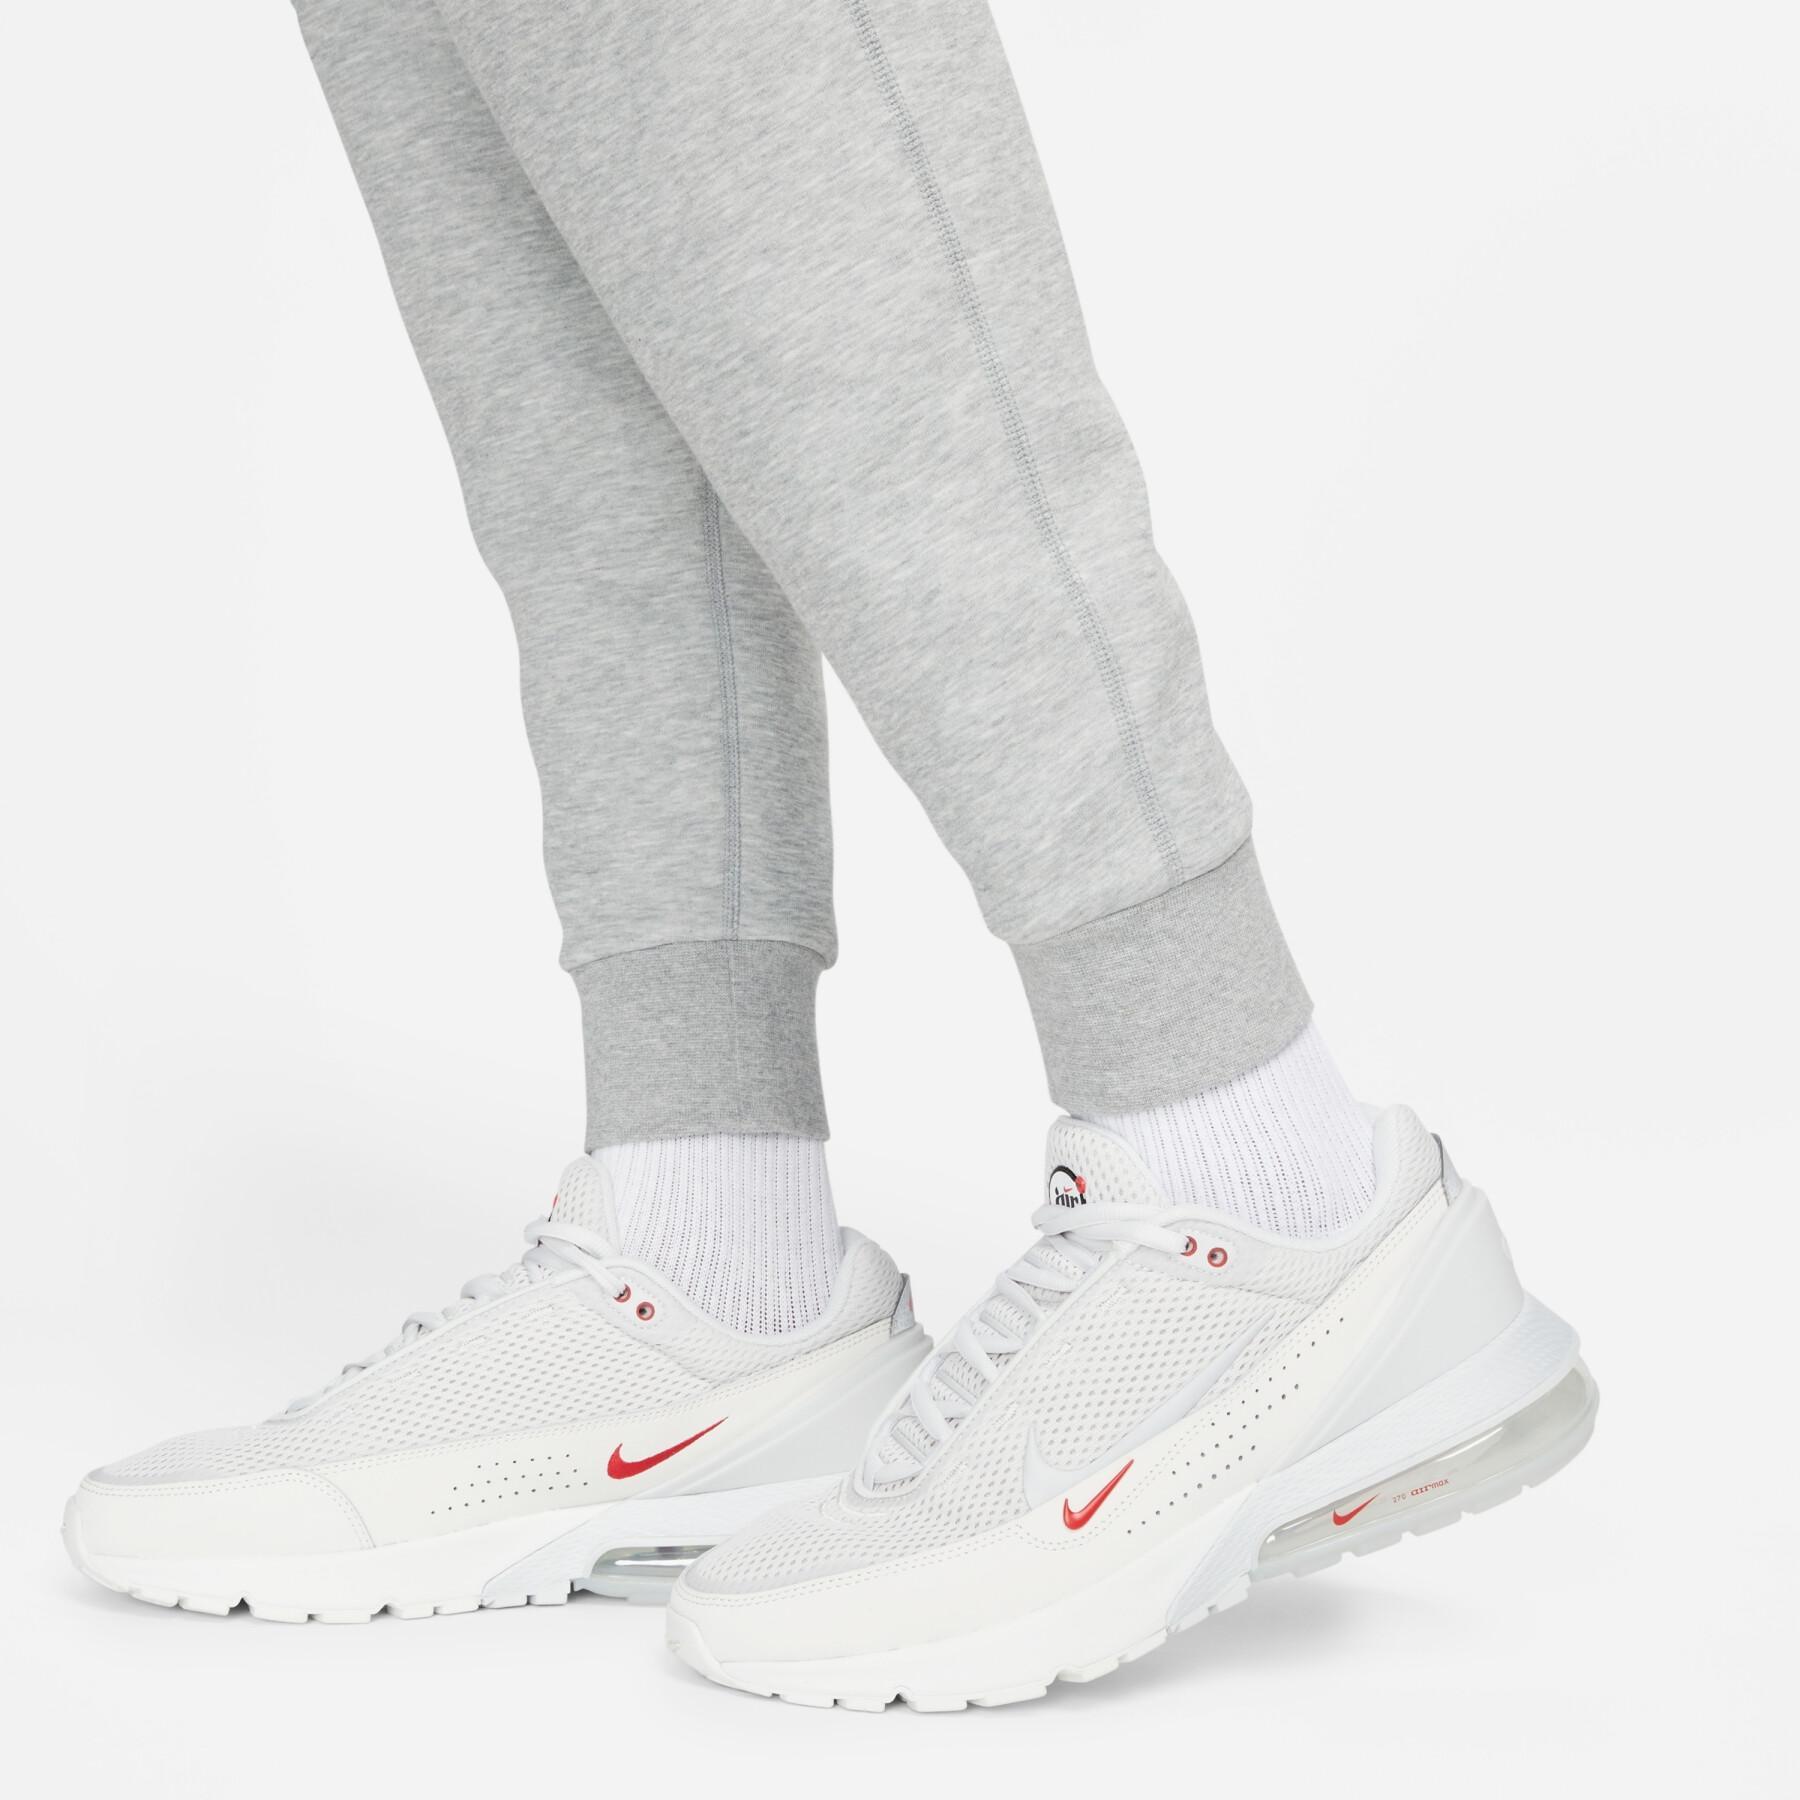 Sweatpants Nike Tech Fleece